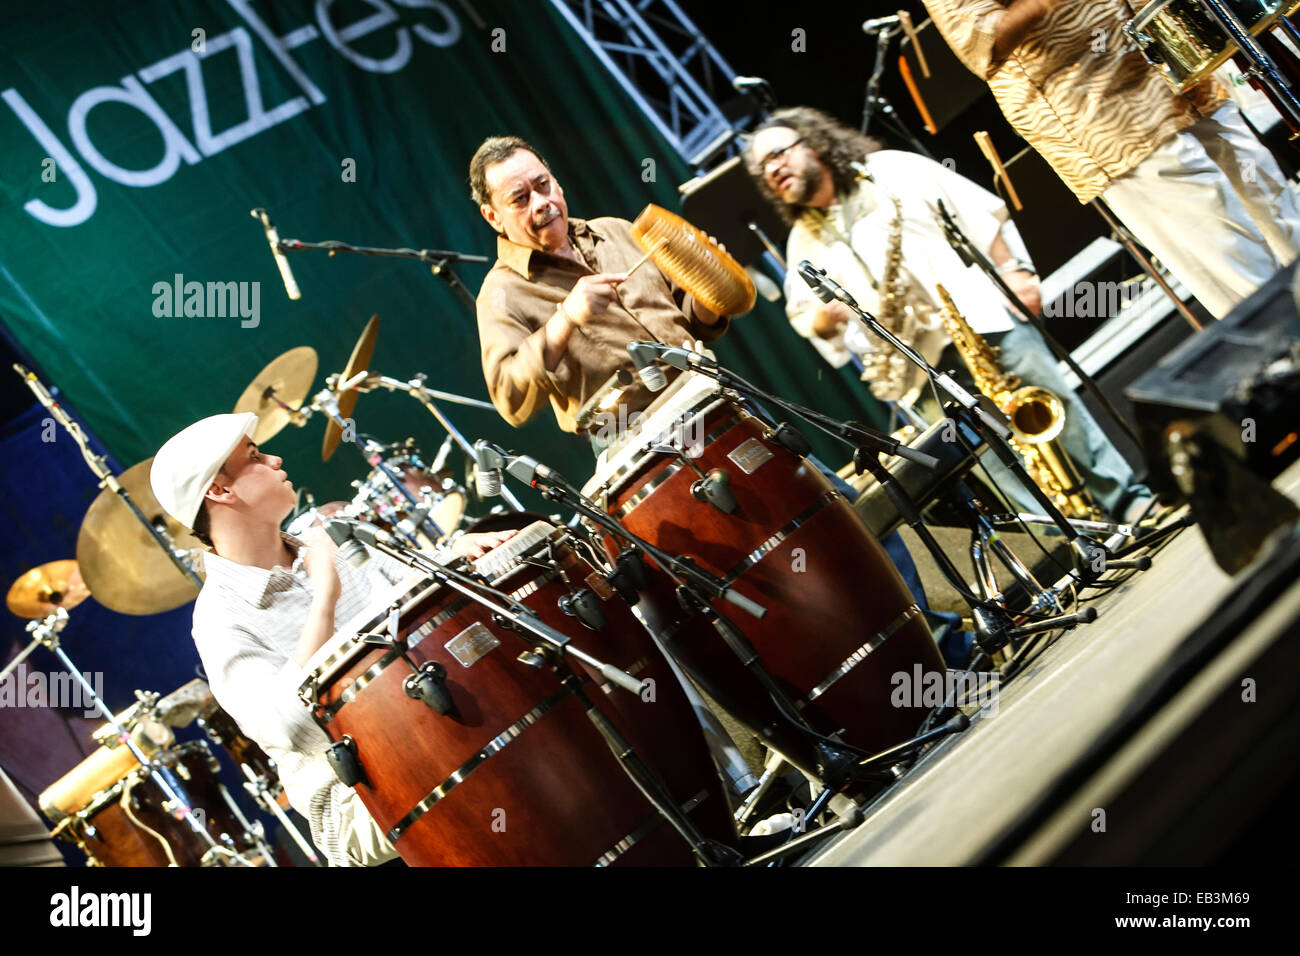 Musicians performing at Heineken Jazz Festival, San Juan, Puerto Rico Stock Photo